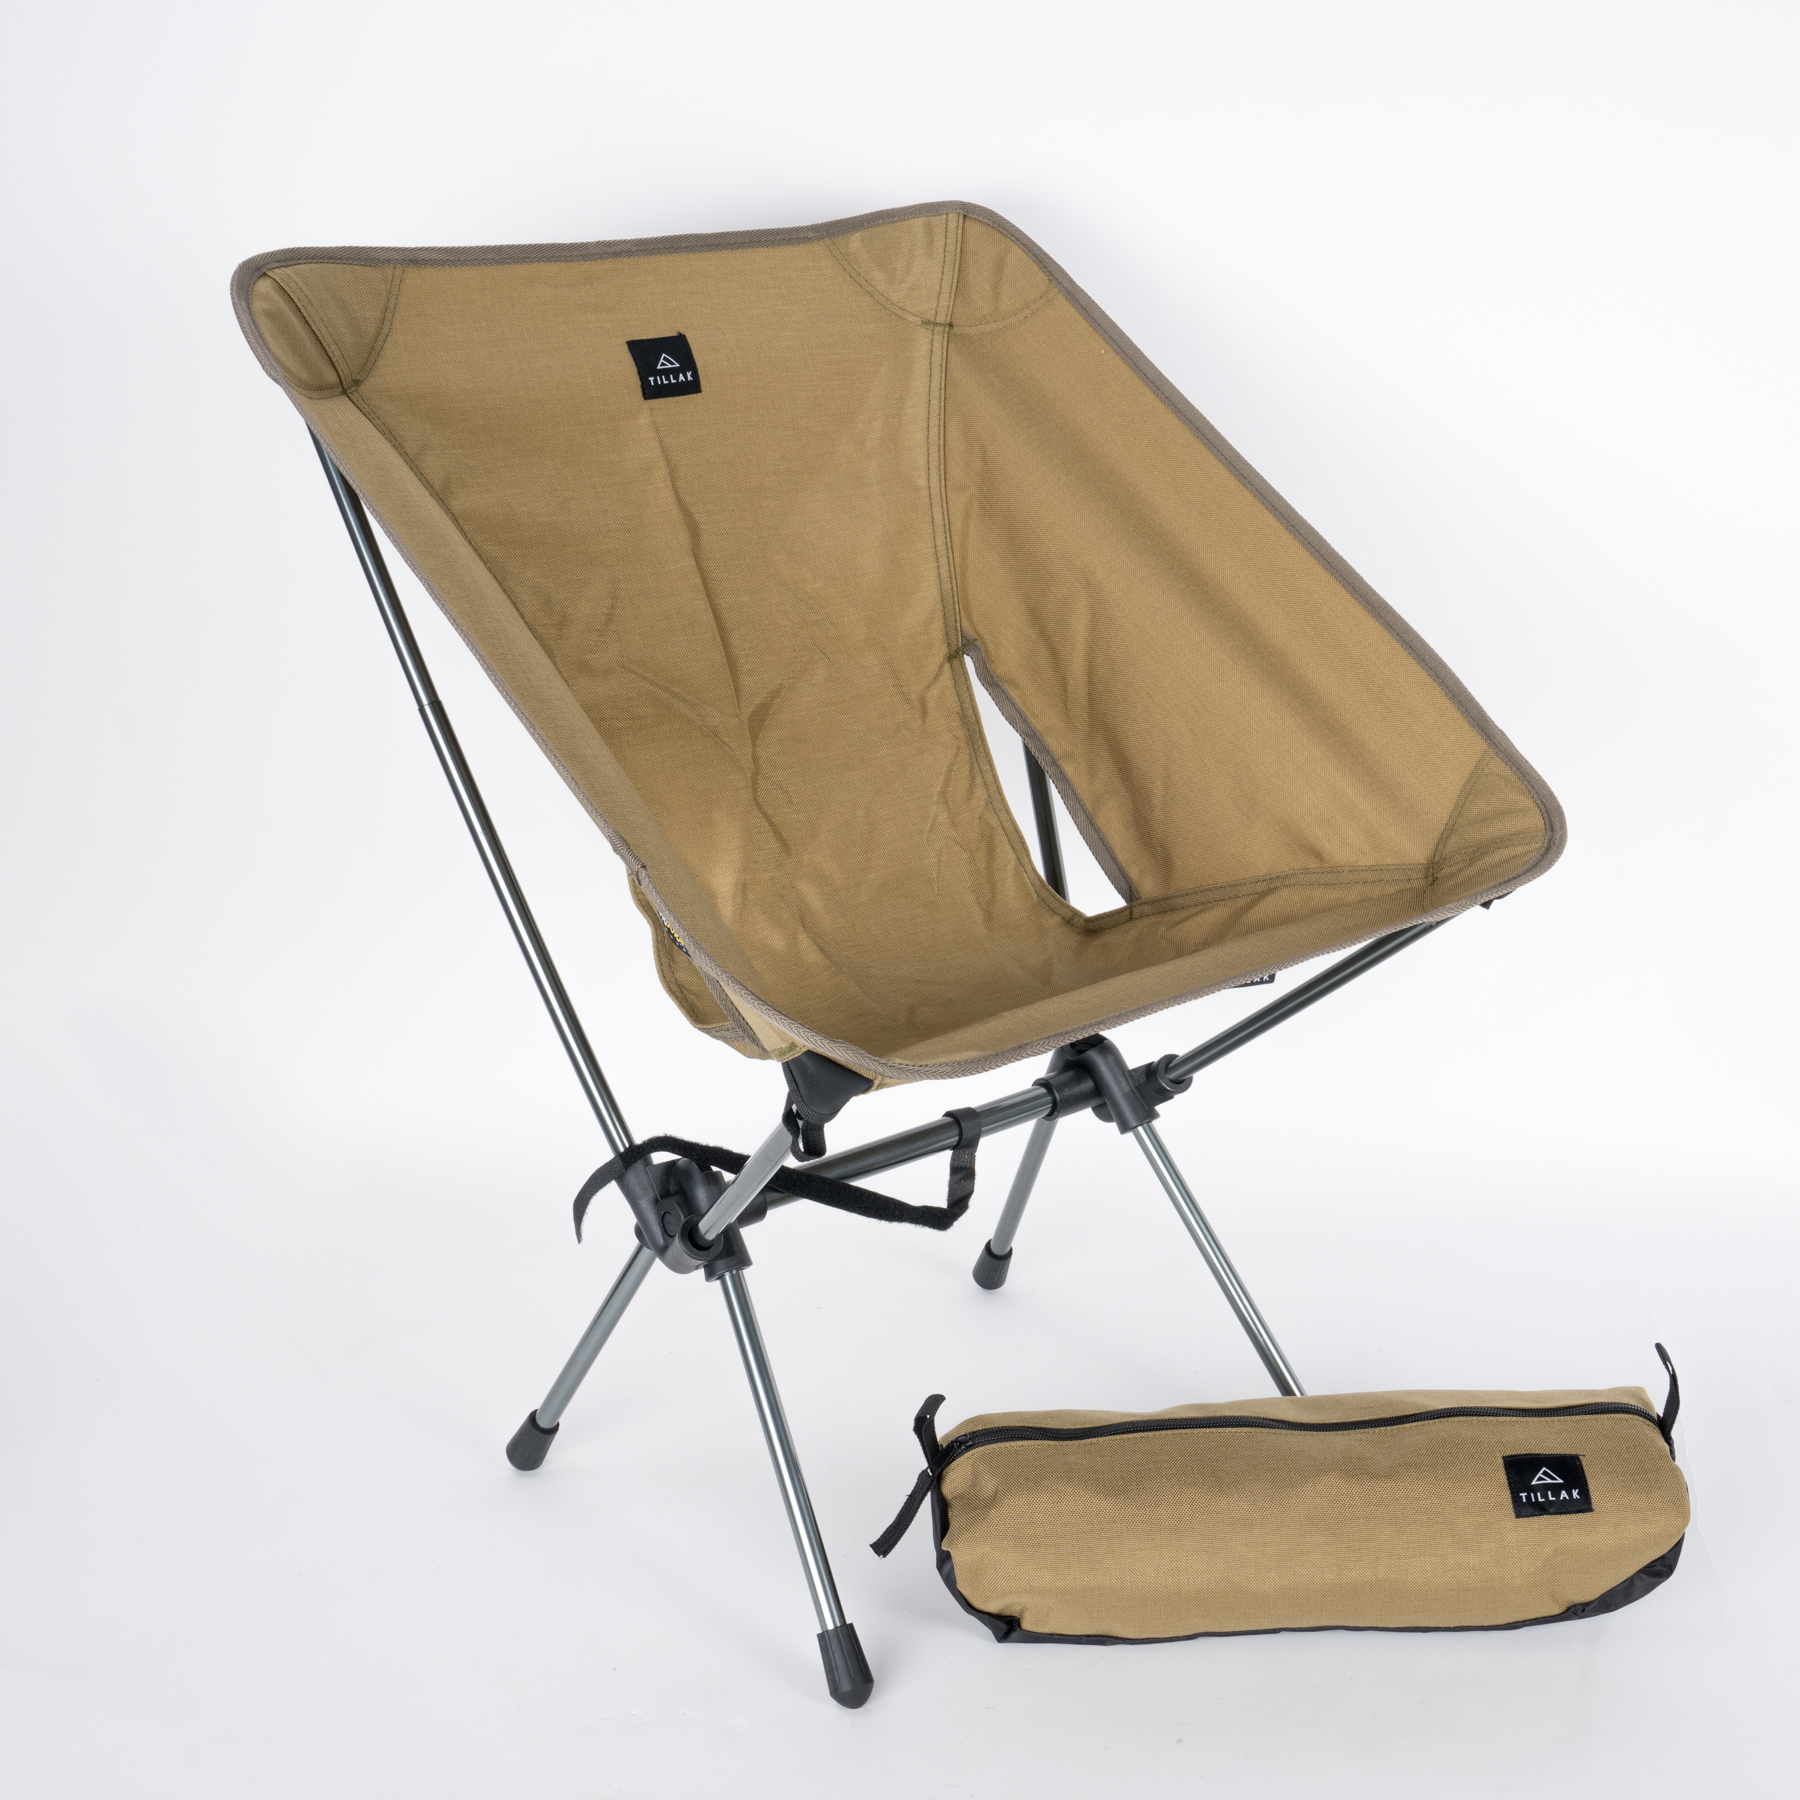 TILLAK Camping Tactical Chair One